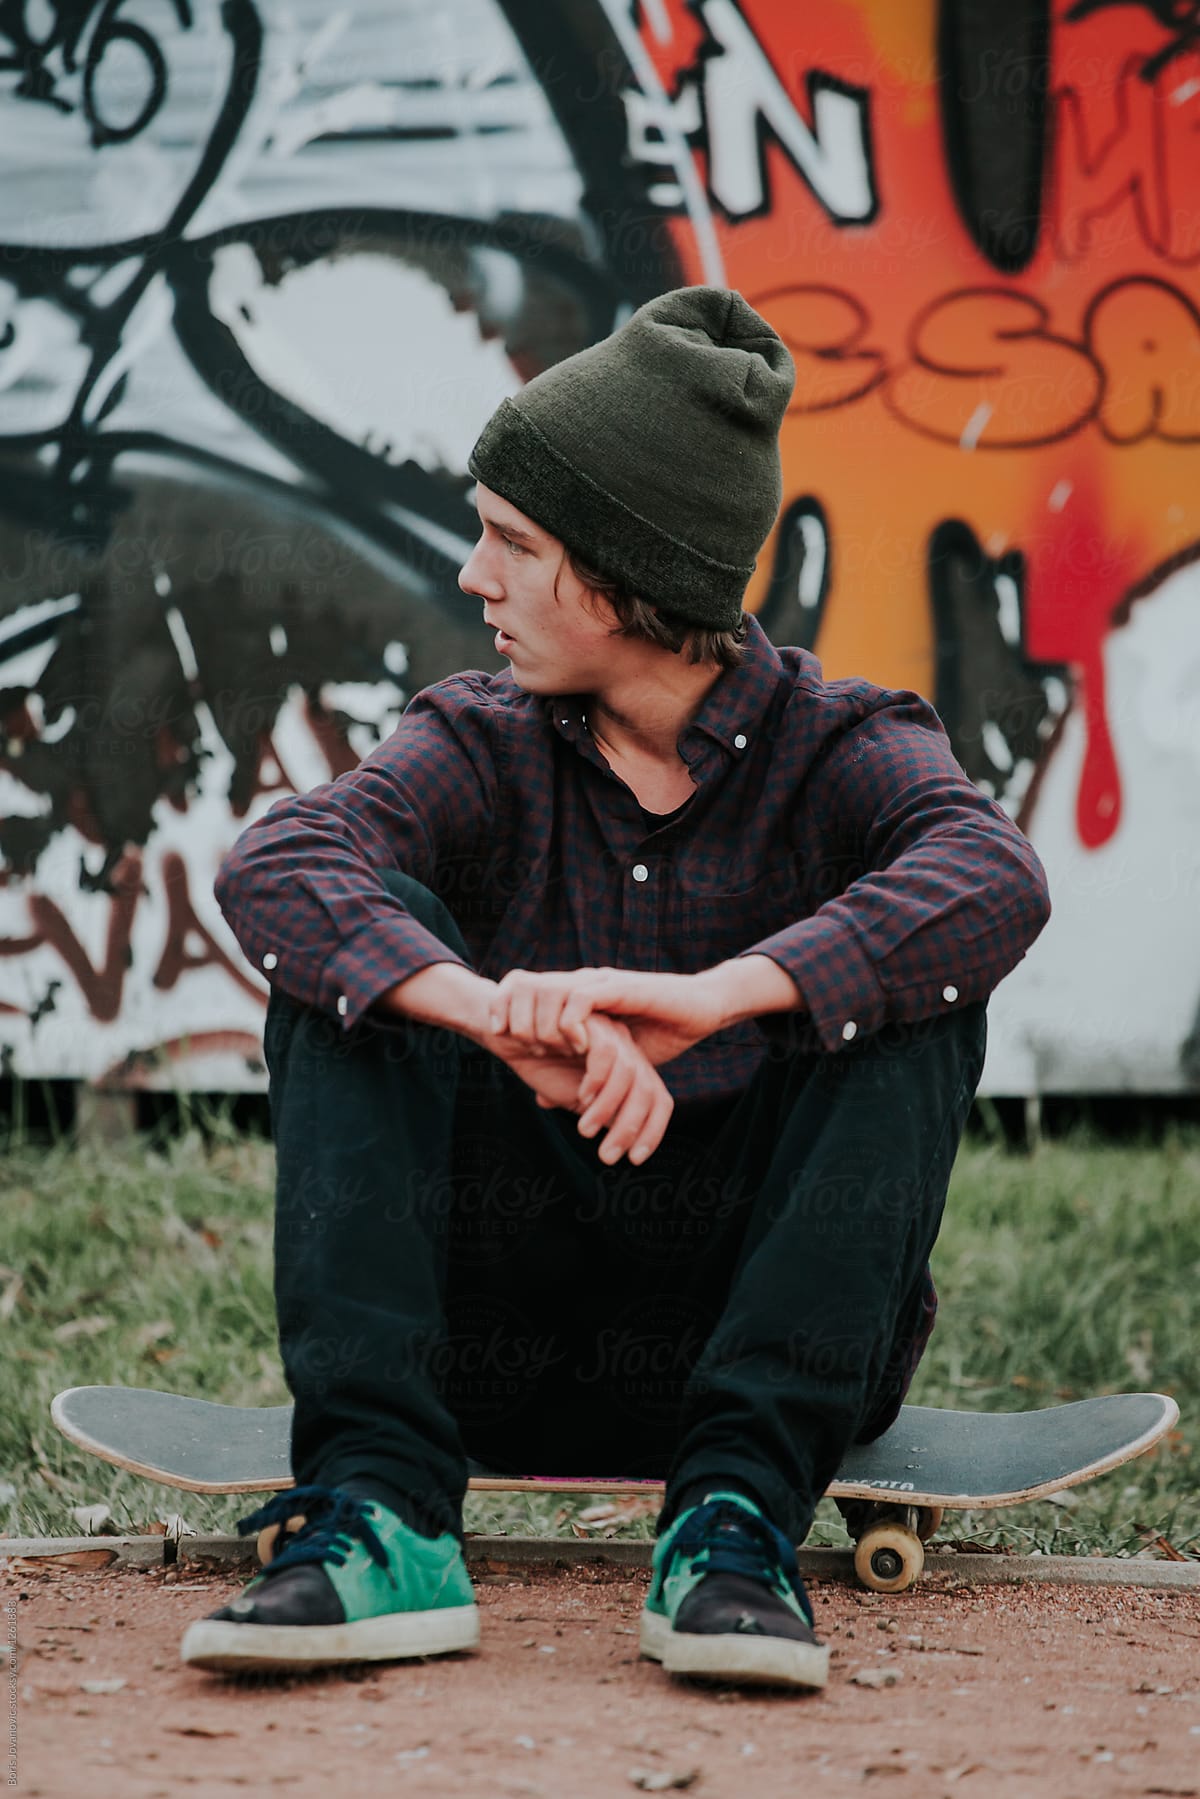 Young stylish man sitting on a skateboard